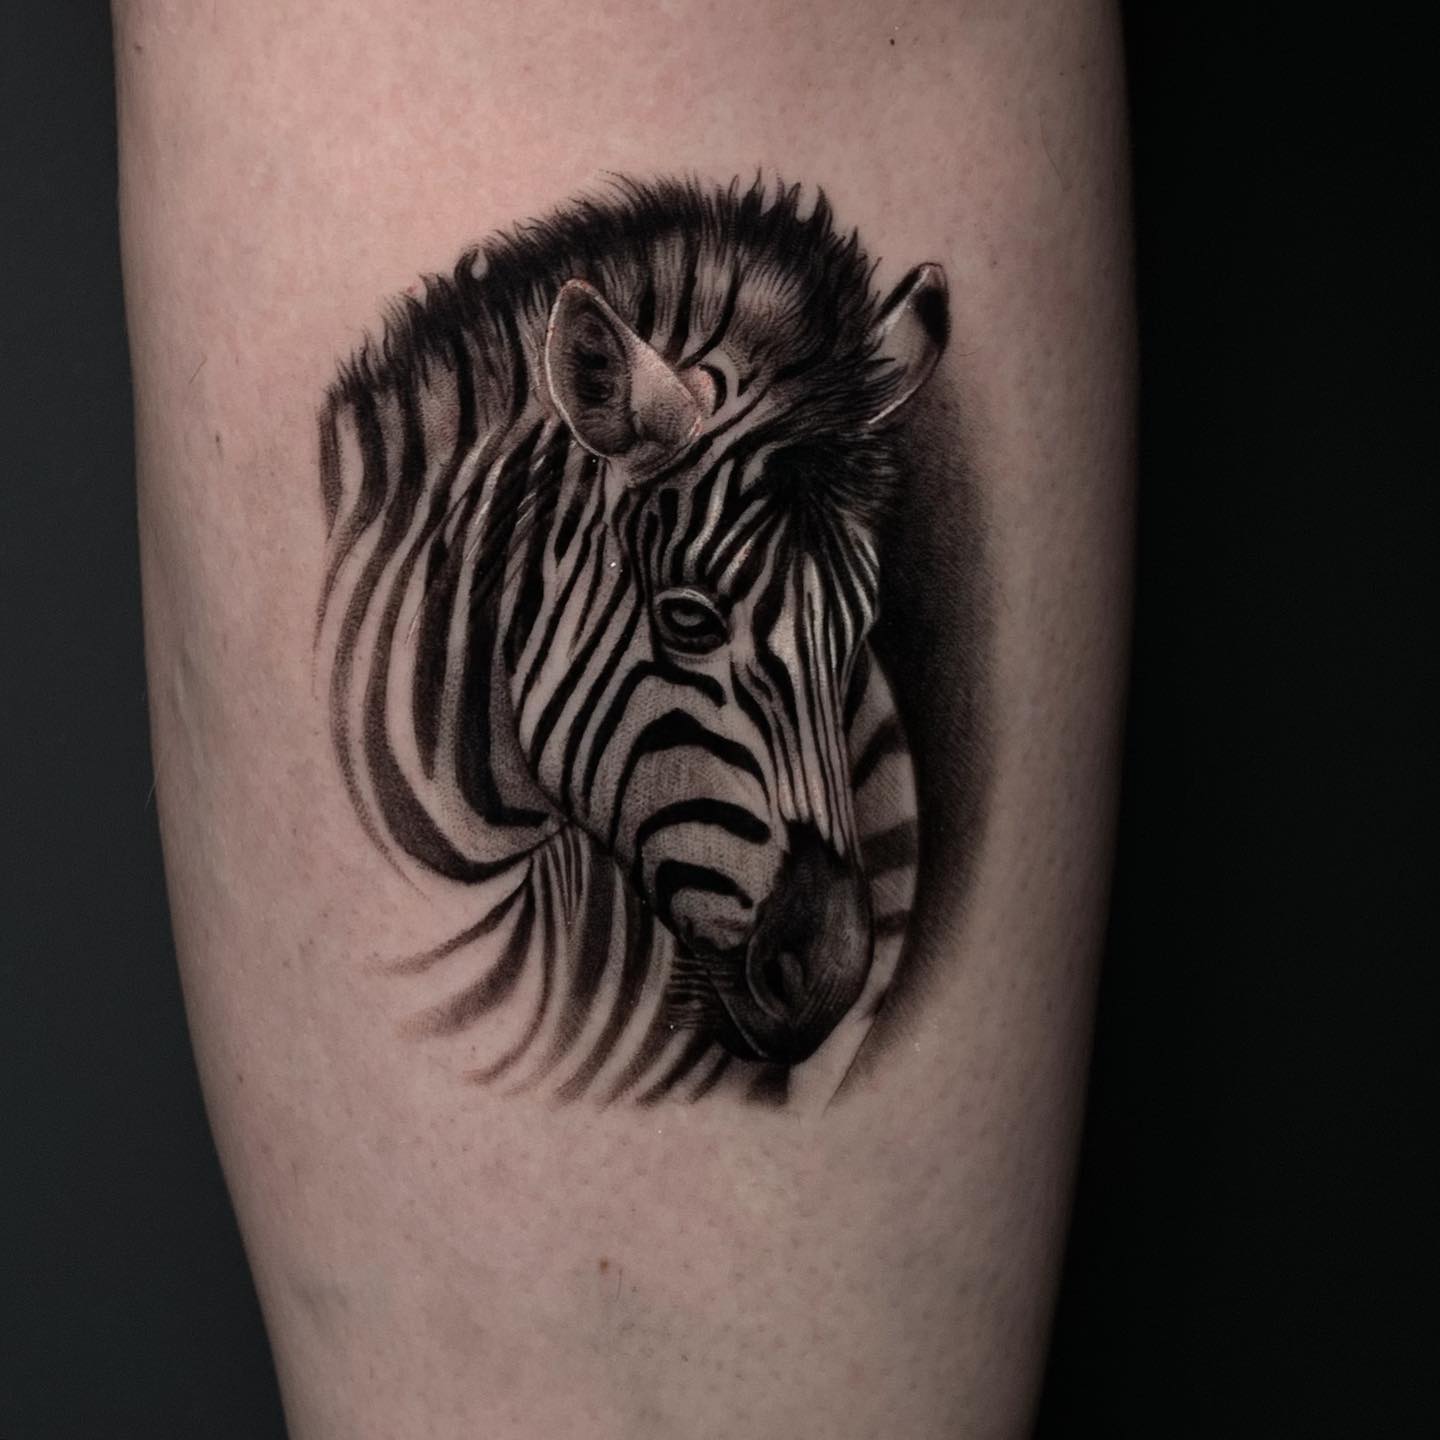 Zebra tattoo design by dani moreno garcia